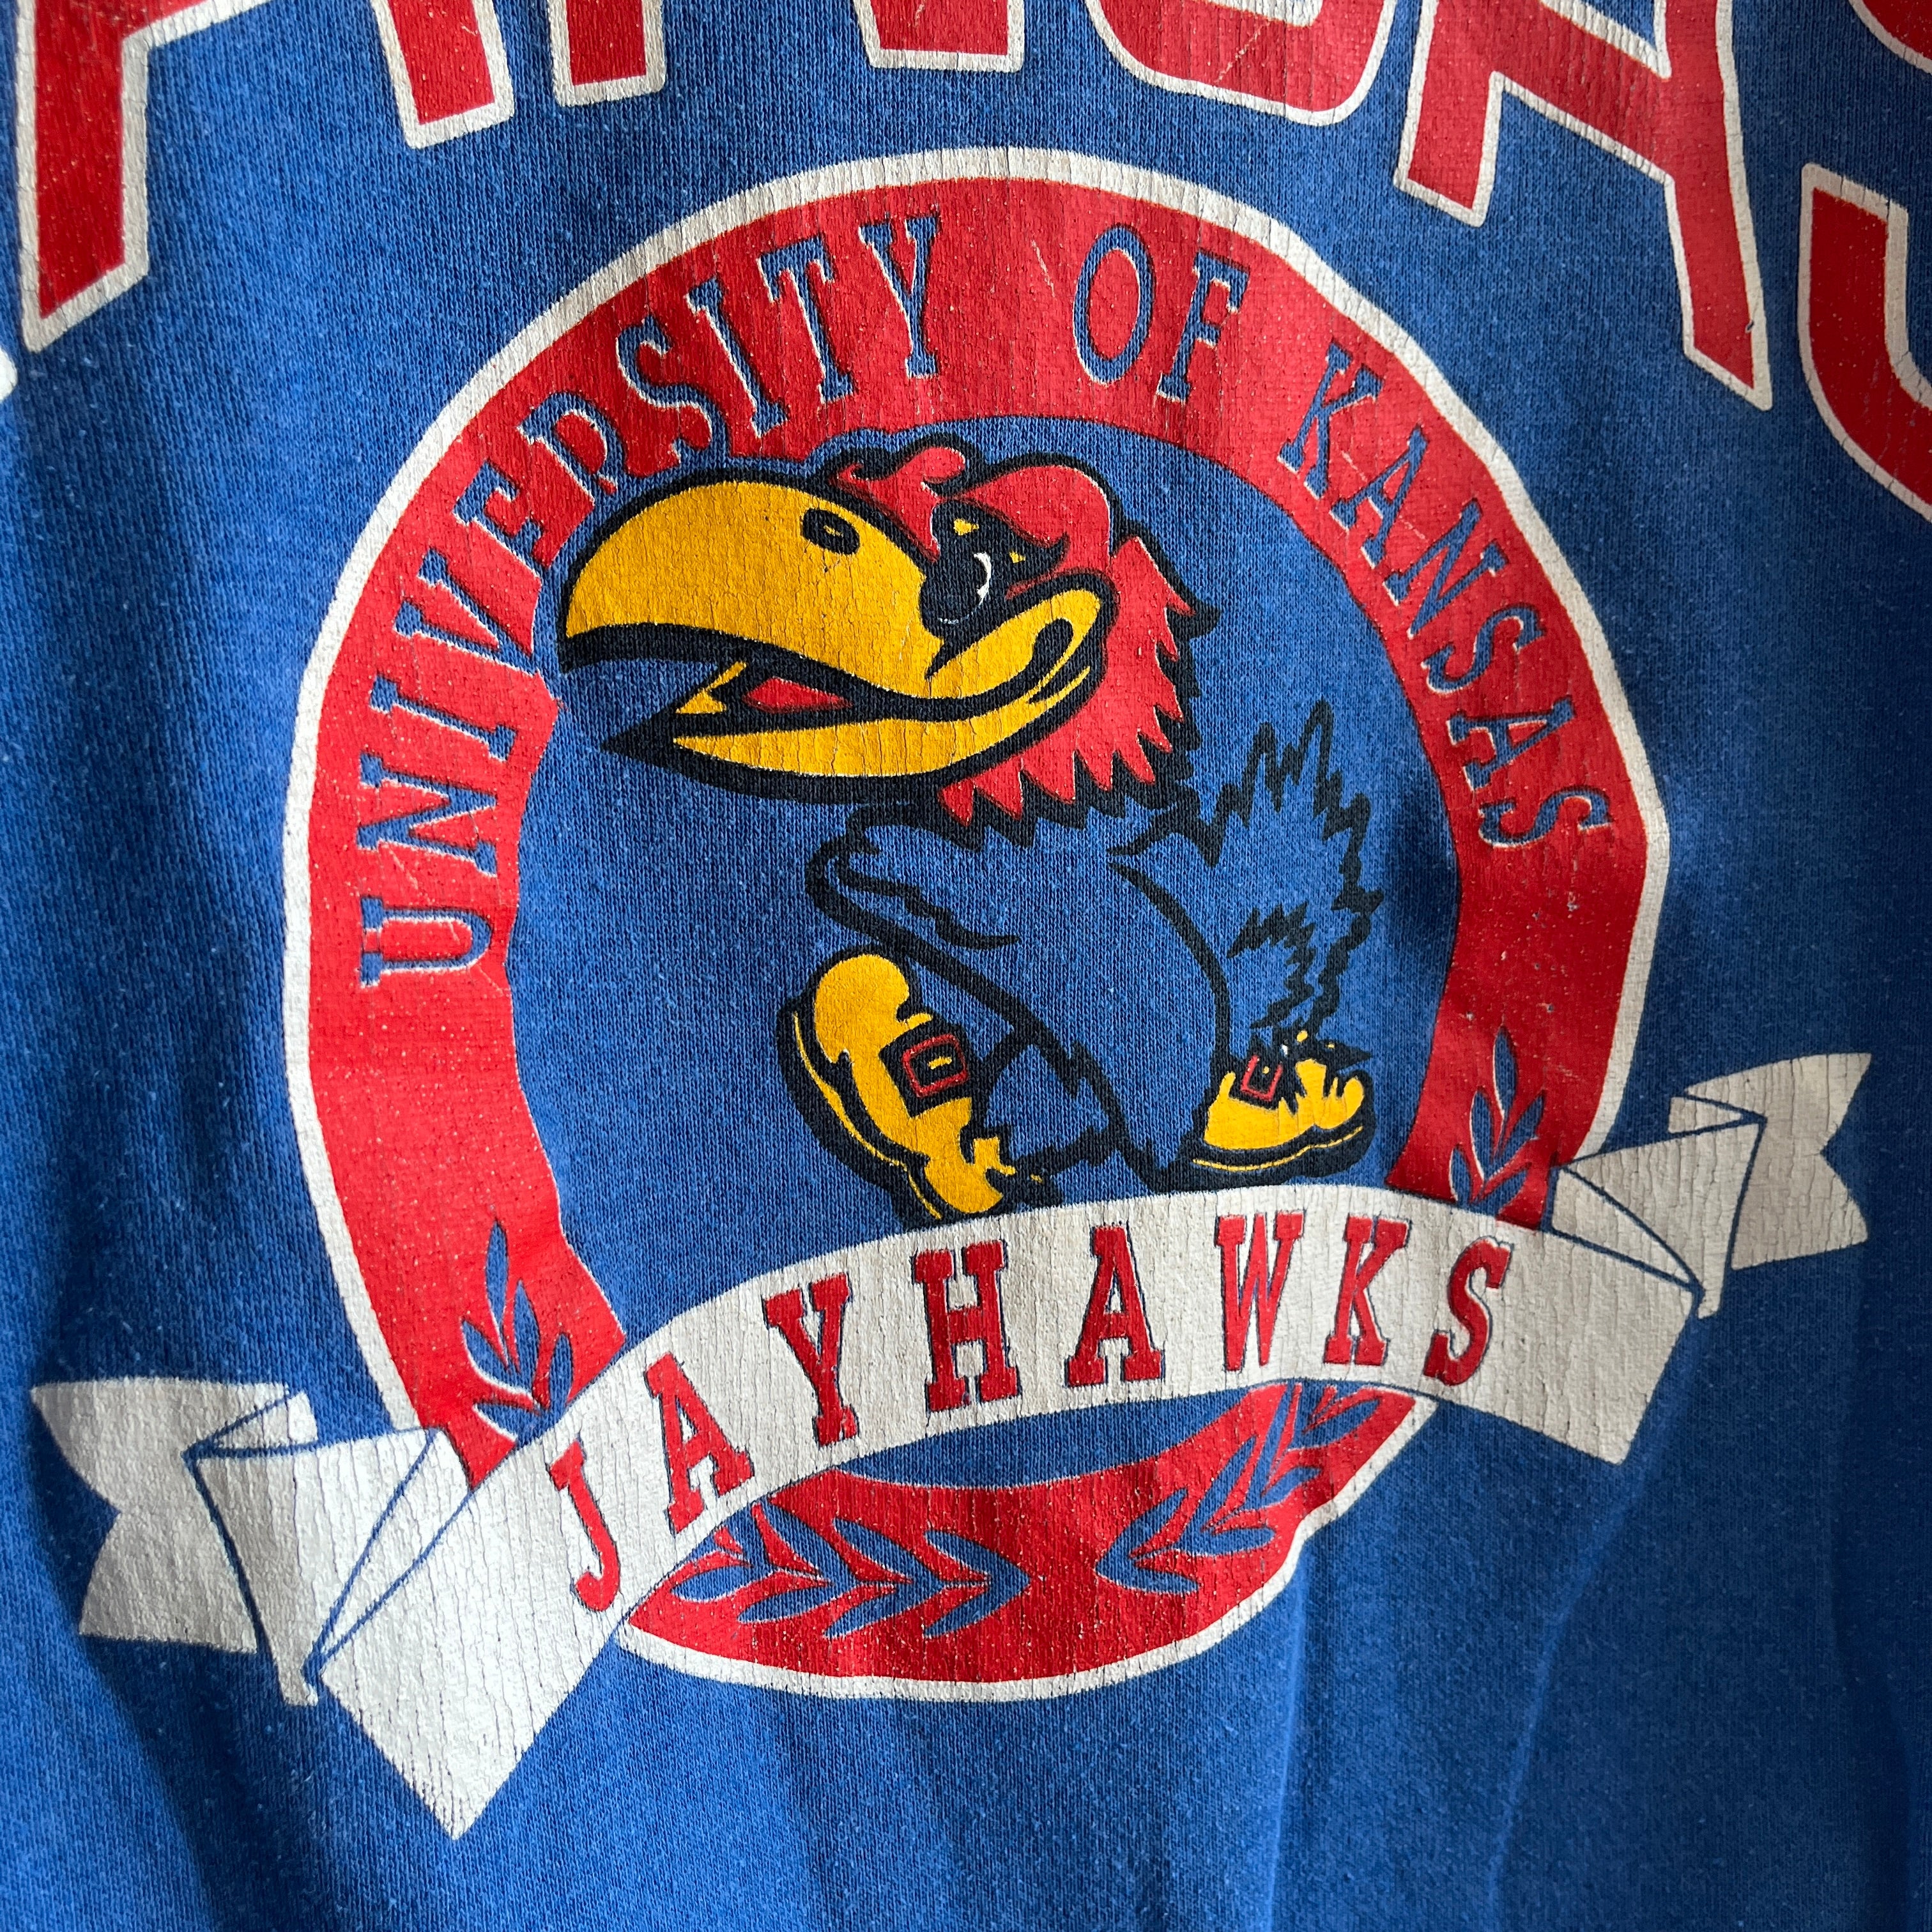 1980s Kansas City Jayhawaks Sweatshirt by Signal - !!!